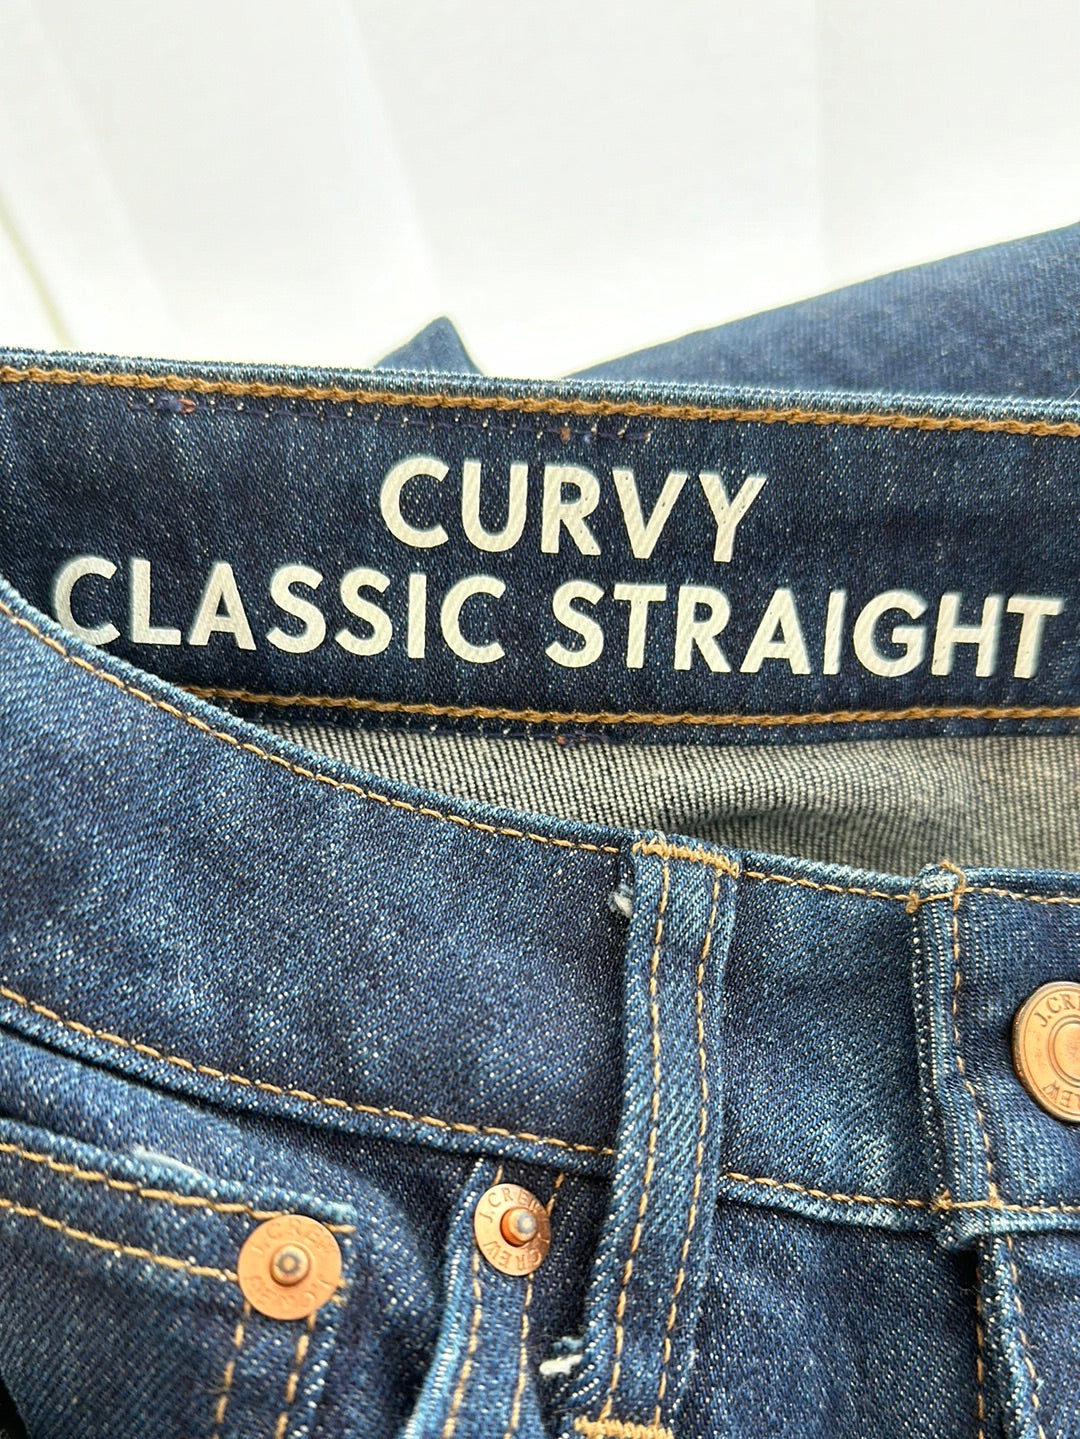 NWT - J. CREW dark wash Curvy Classic Straight Leg Jeans - 26